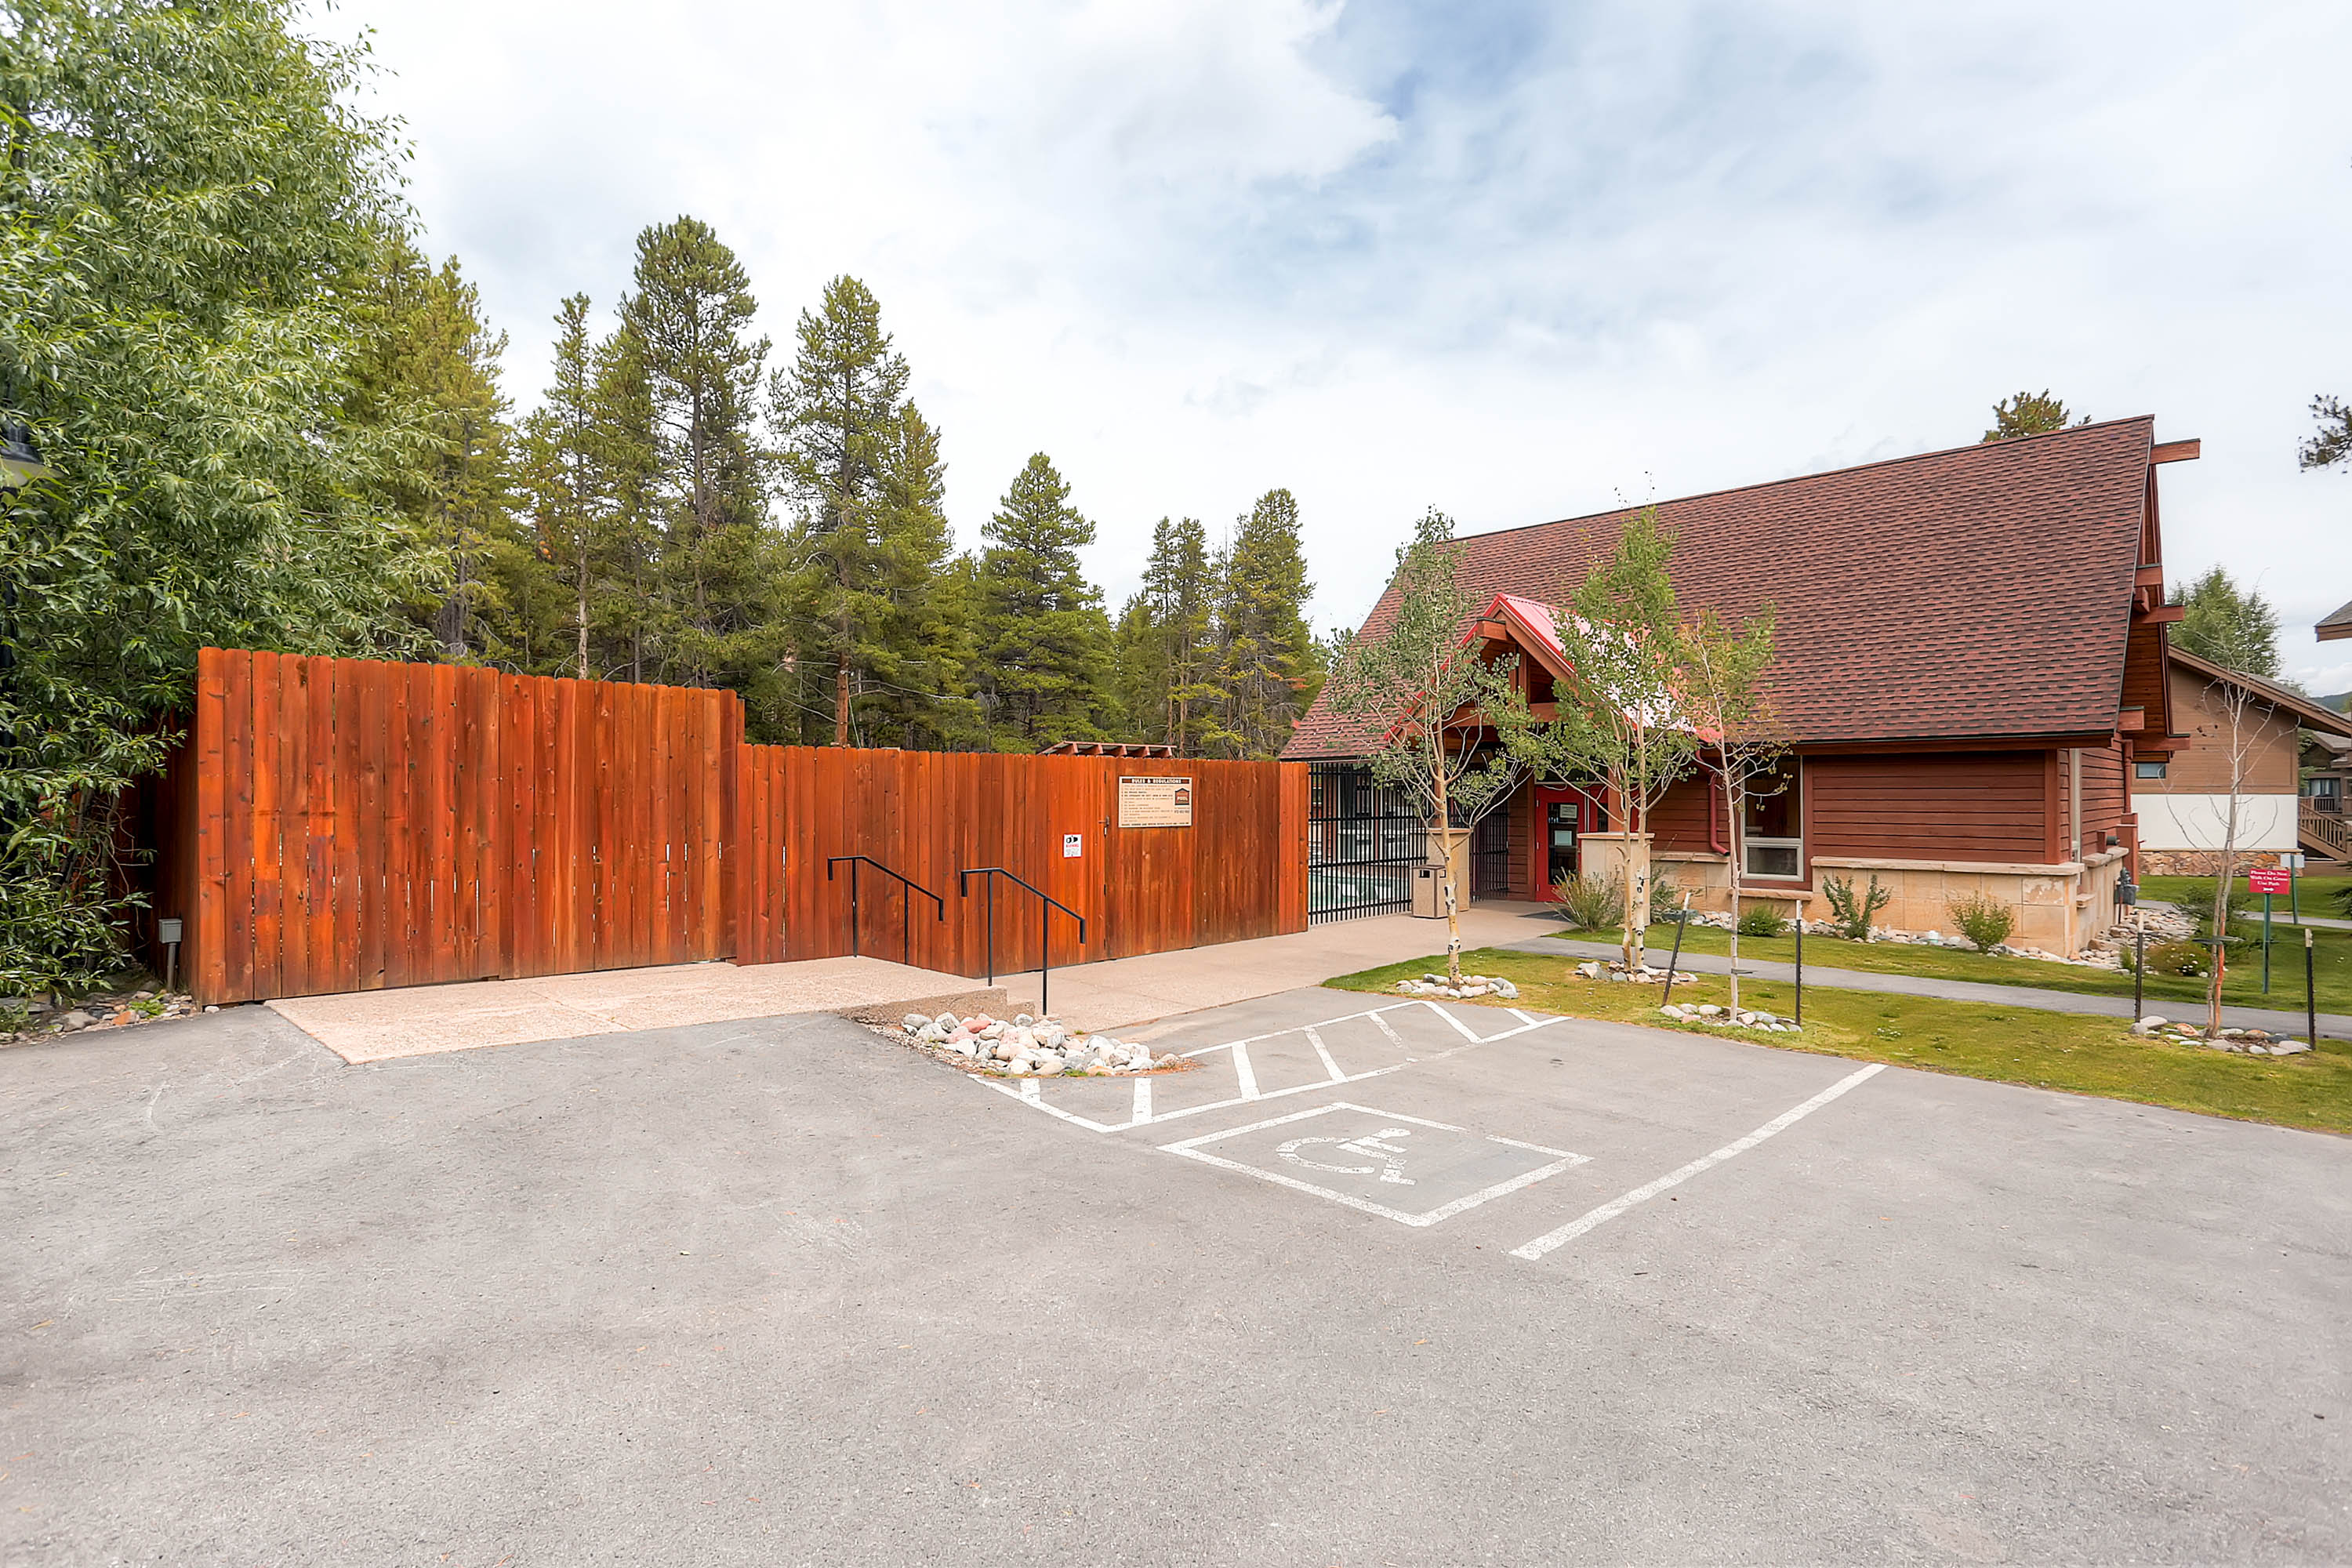 Entryway to pool and hot tub areas - Cedars 53 Breckenridge Vacation Rental